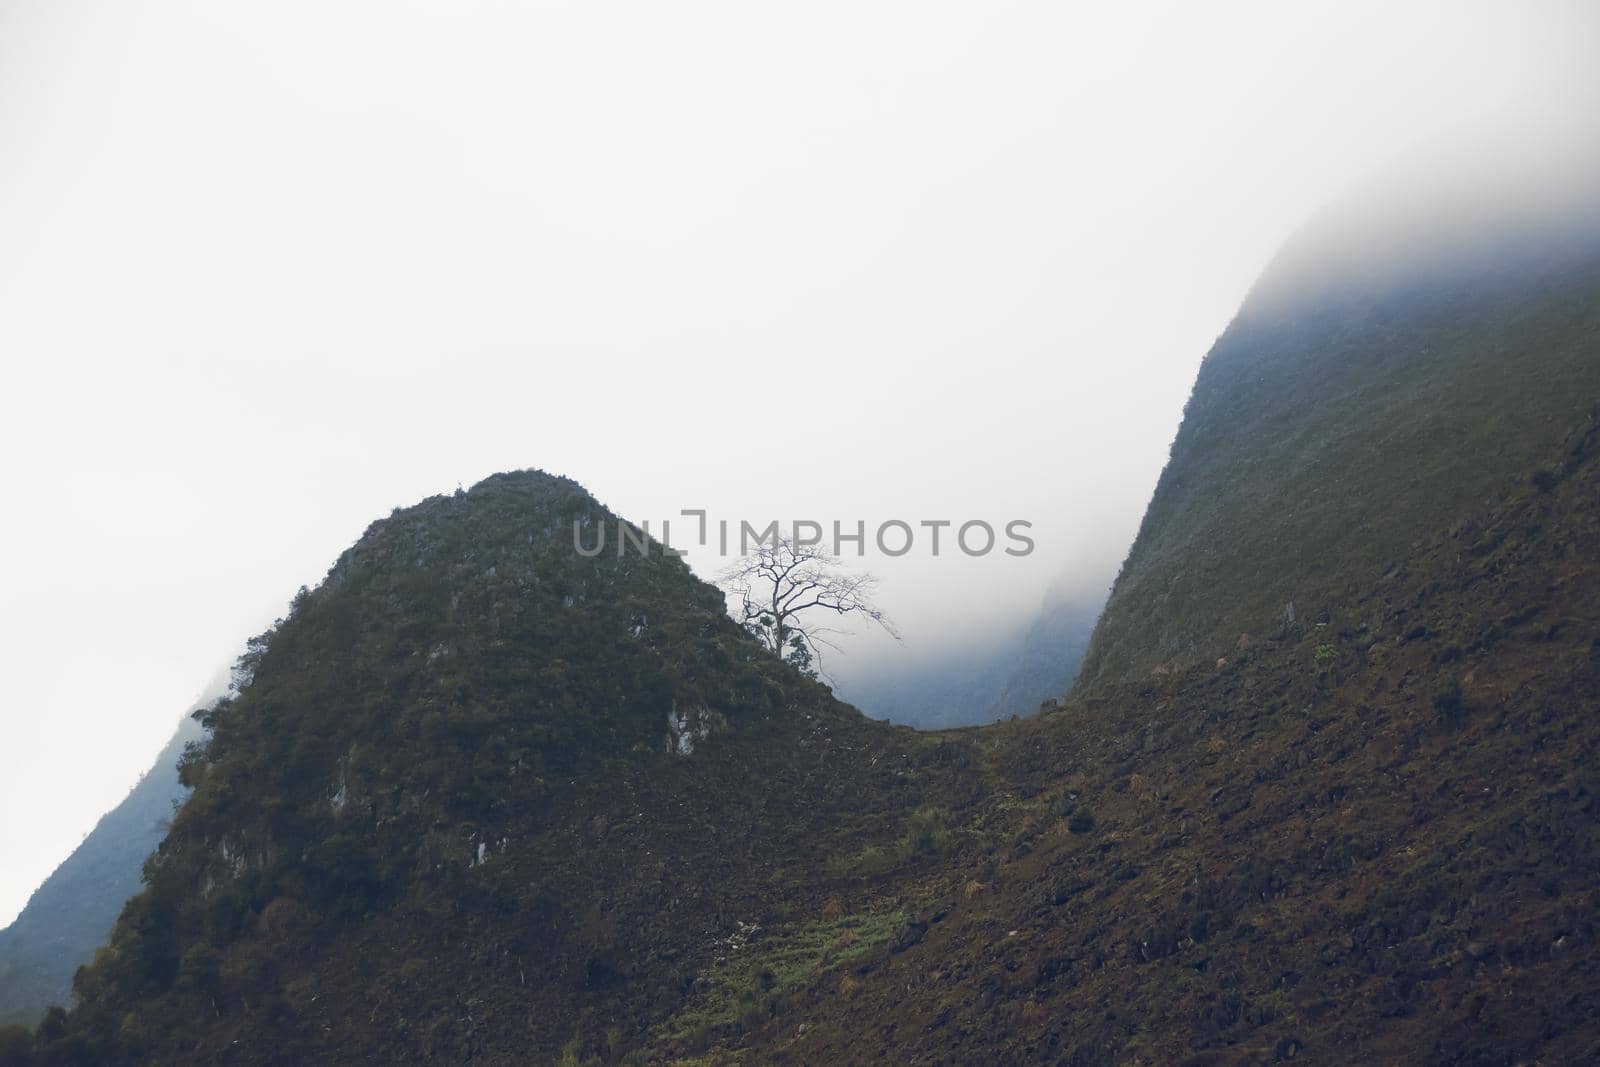 Thick fog descending over the karst mountains by Sonnet15